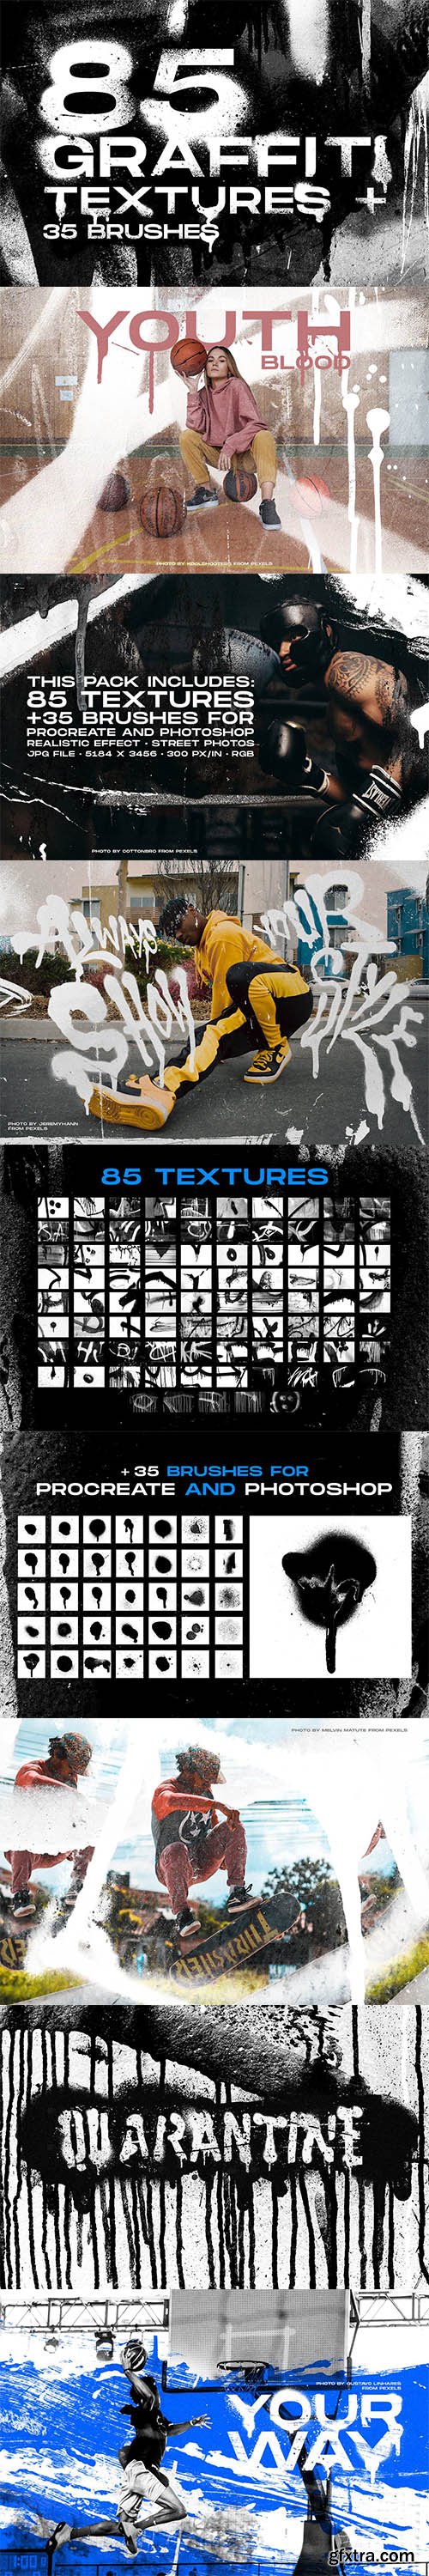 CreativeMarket - Graffiti textures and brushes 5583185